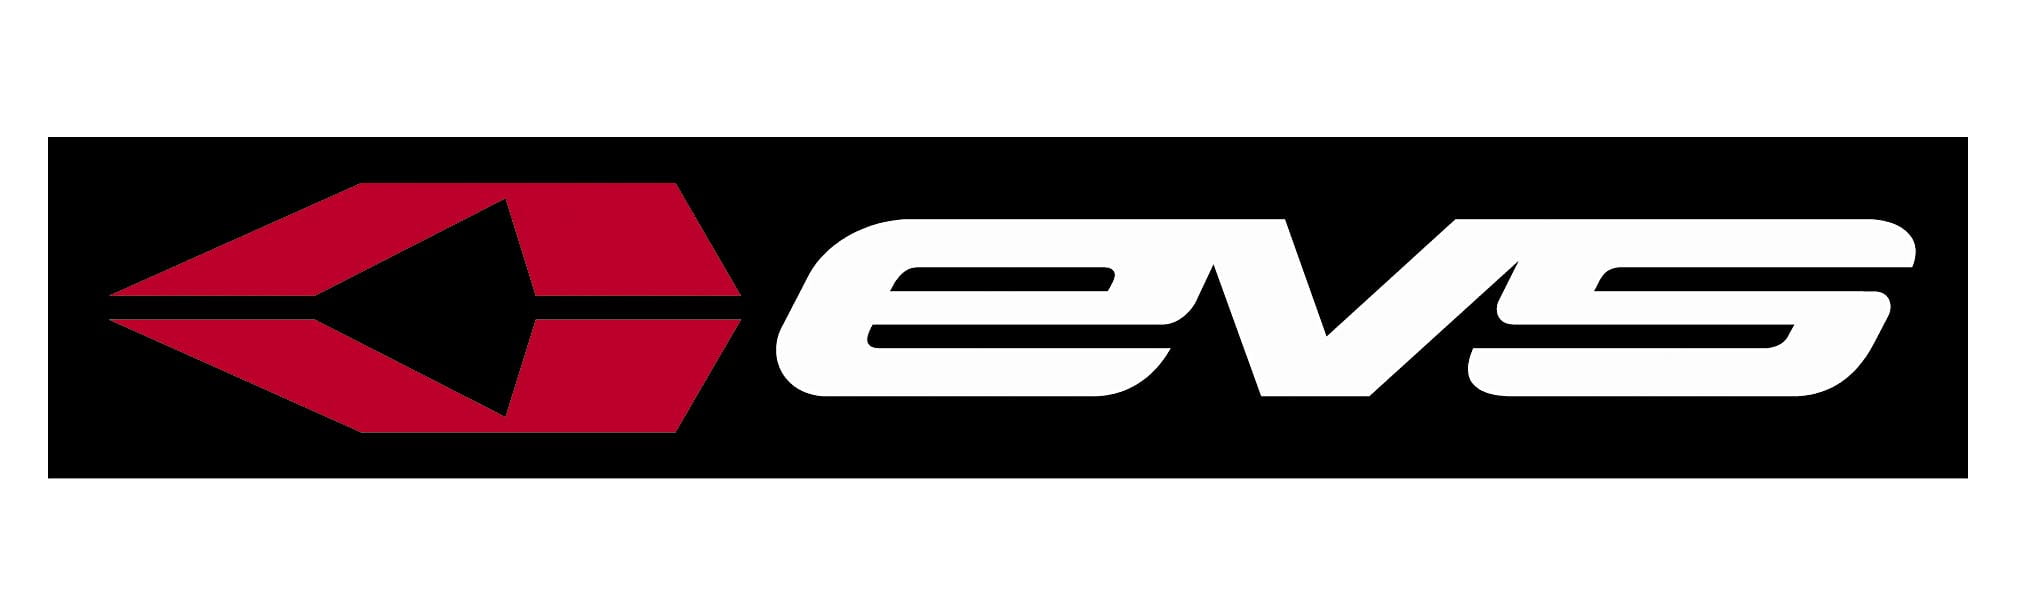 EVS Logo Banner BANNER - Walmart.com